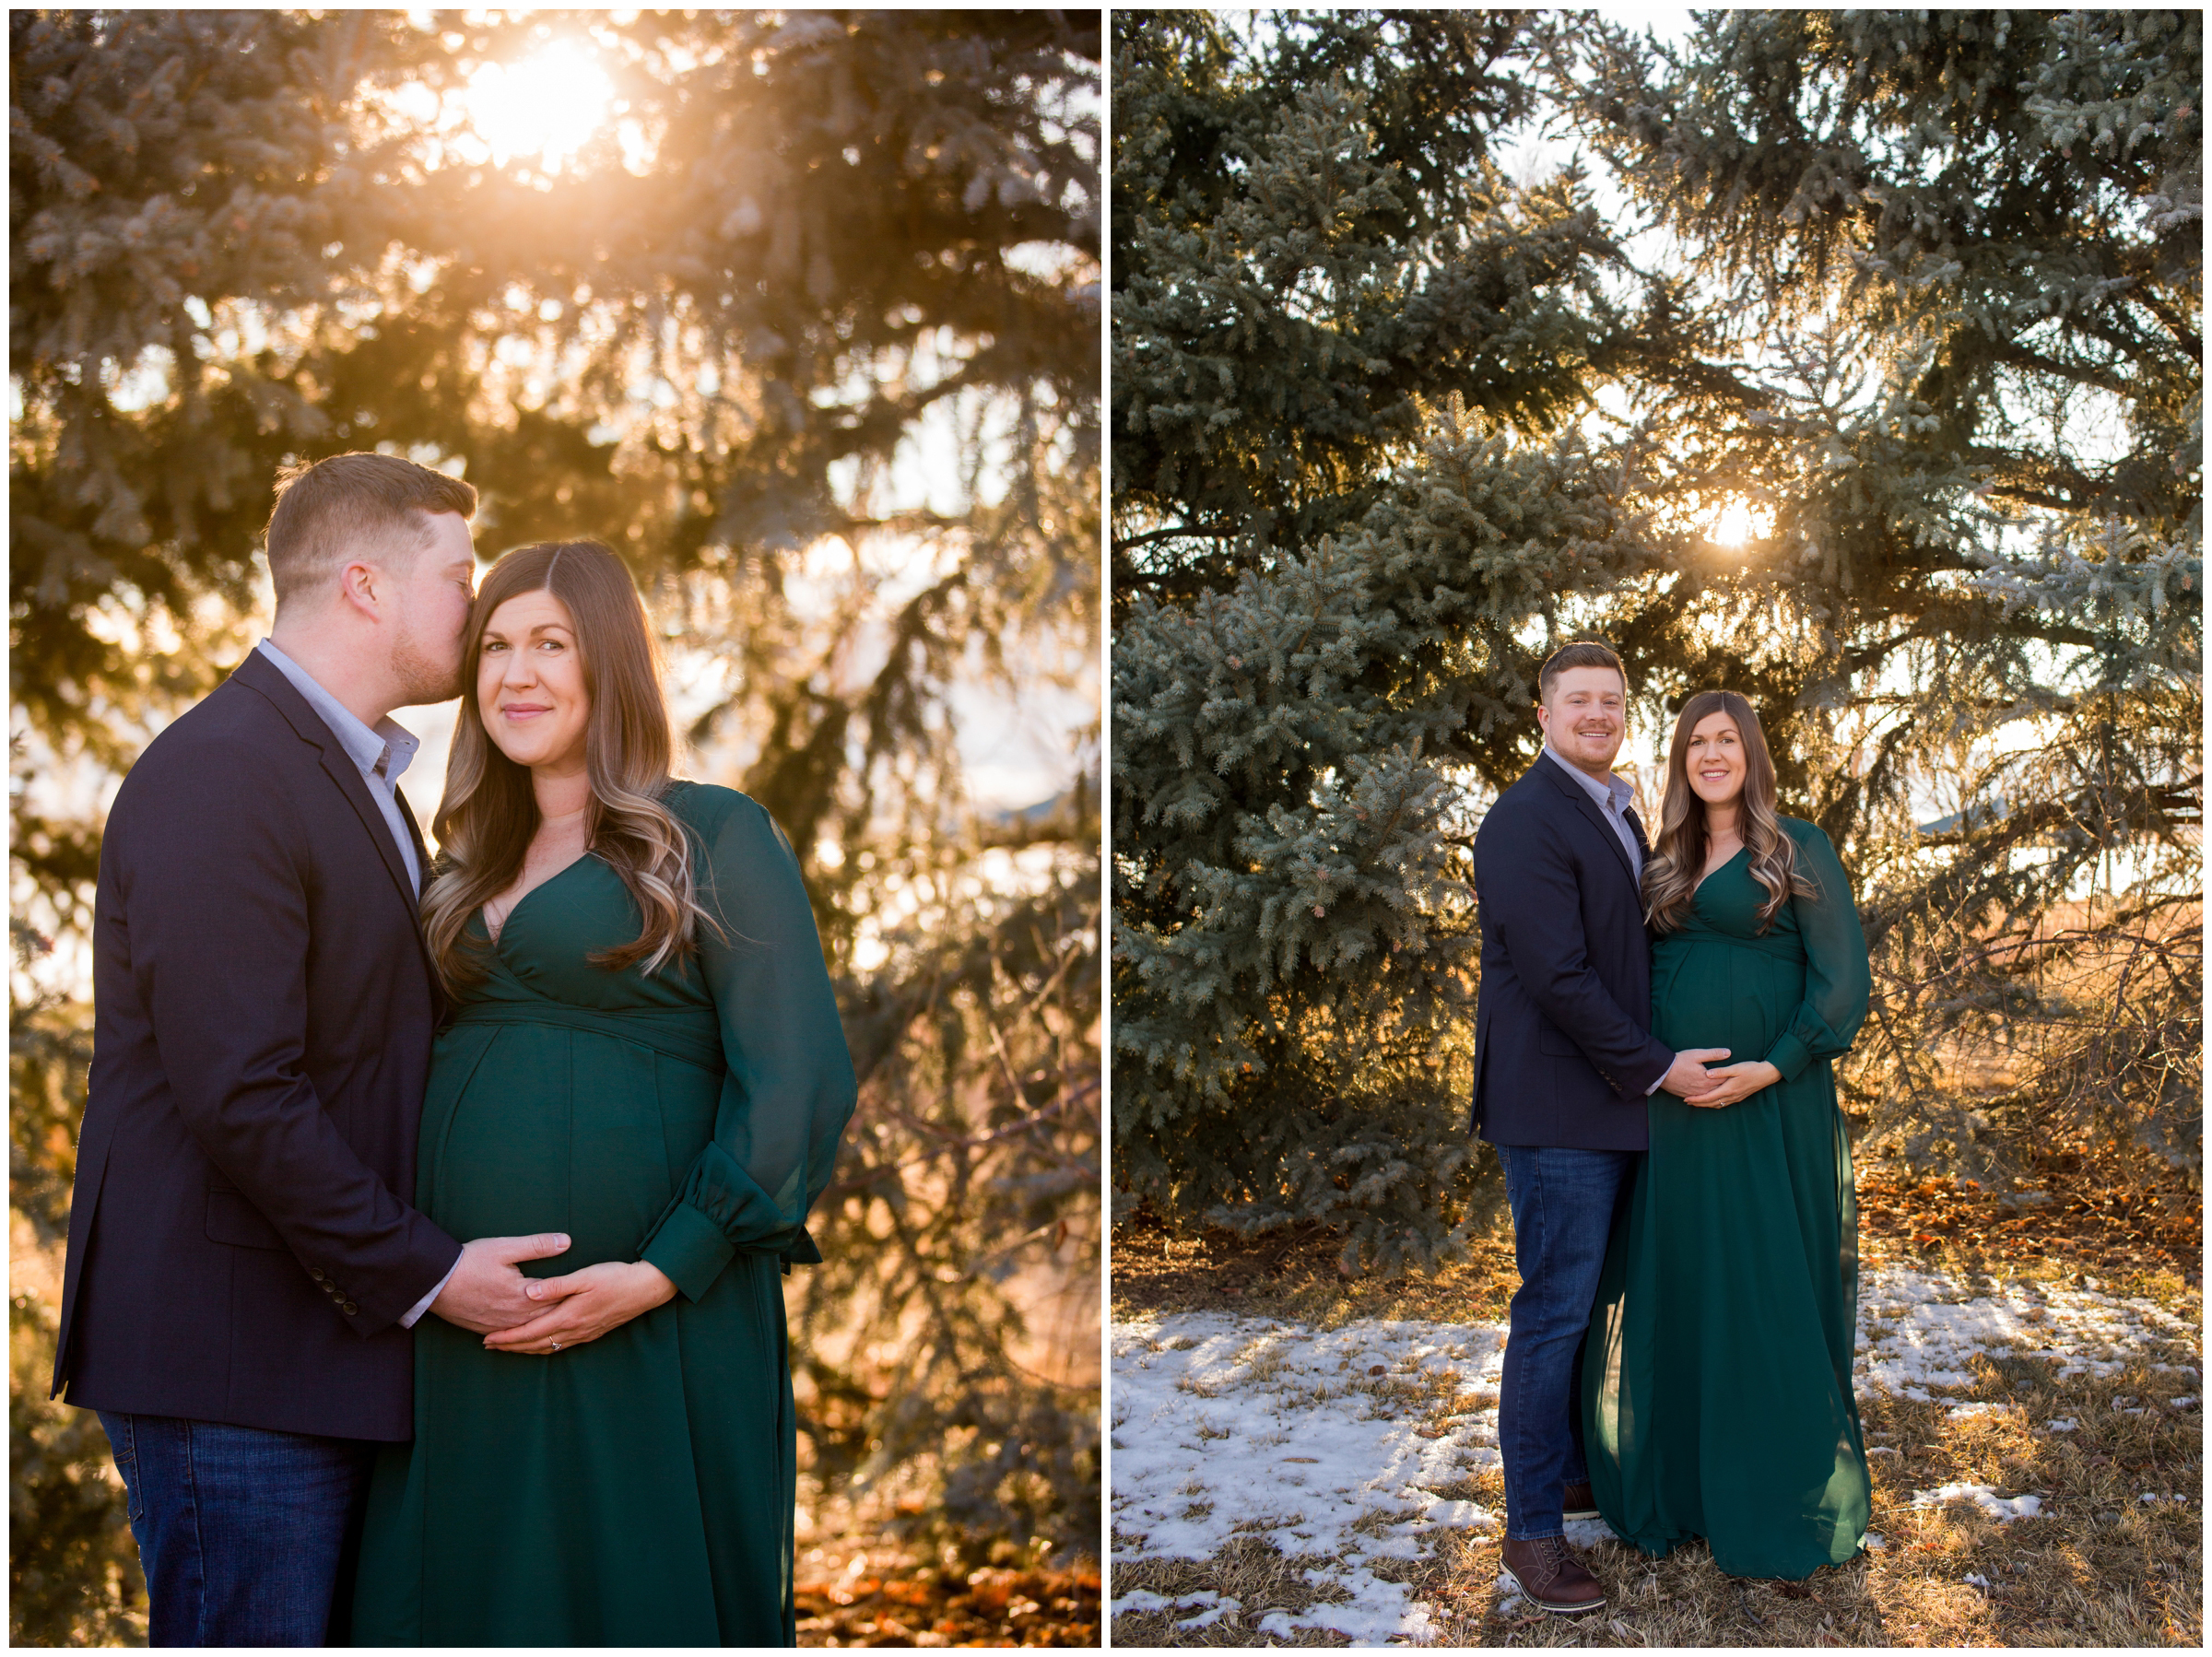 sunny winter maternity photography inspiration in Longmont Colorado 